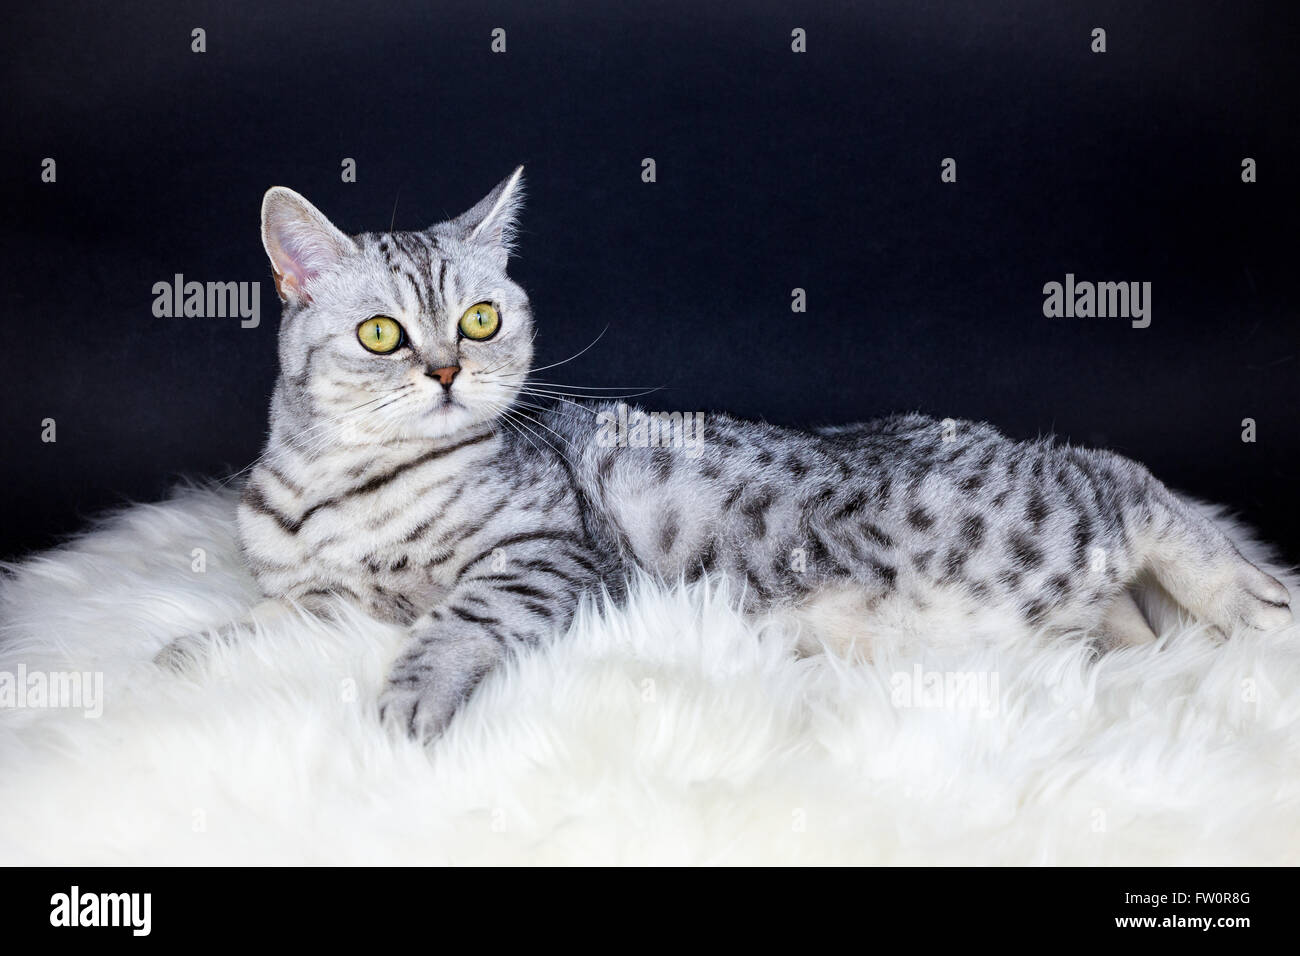 British short hair black silver tabby spotted cat lying on sheepskin Stock Photo